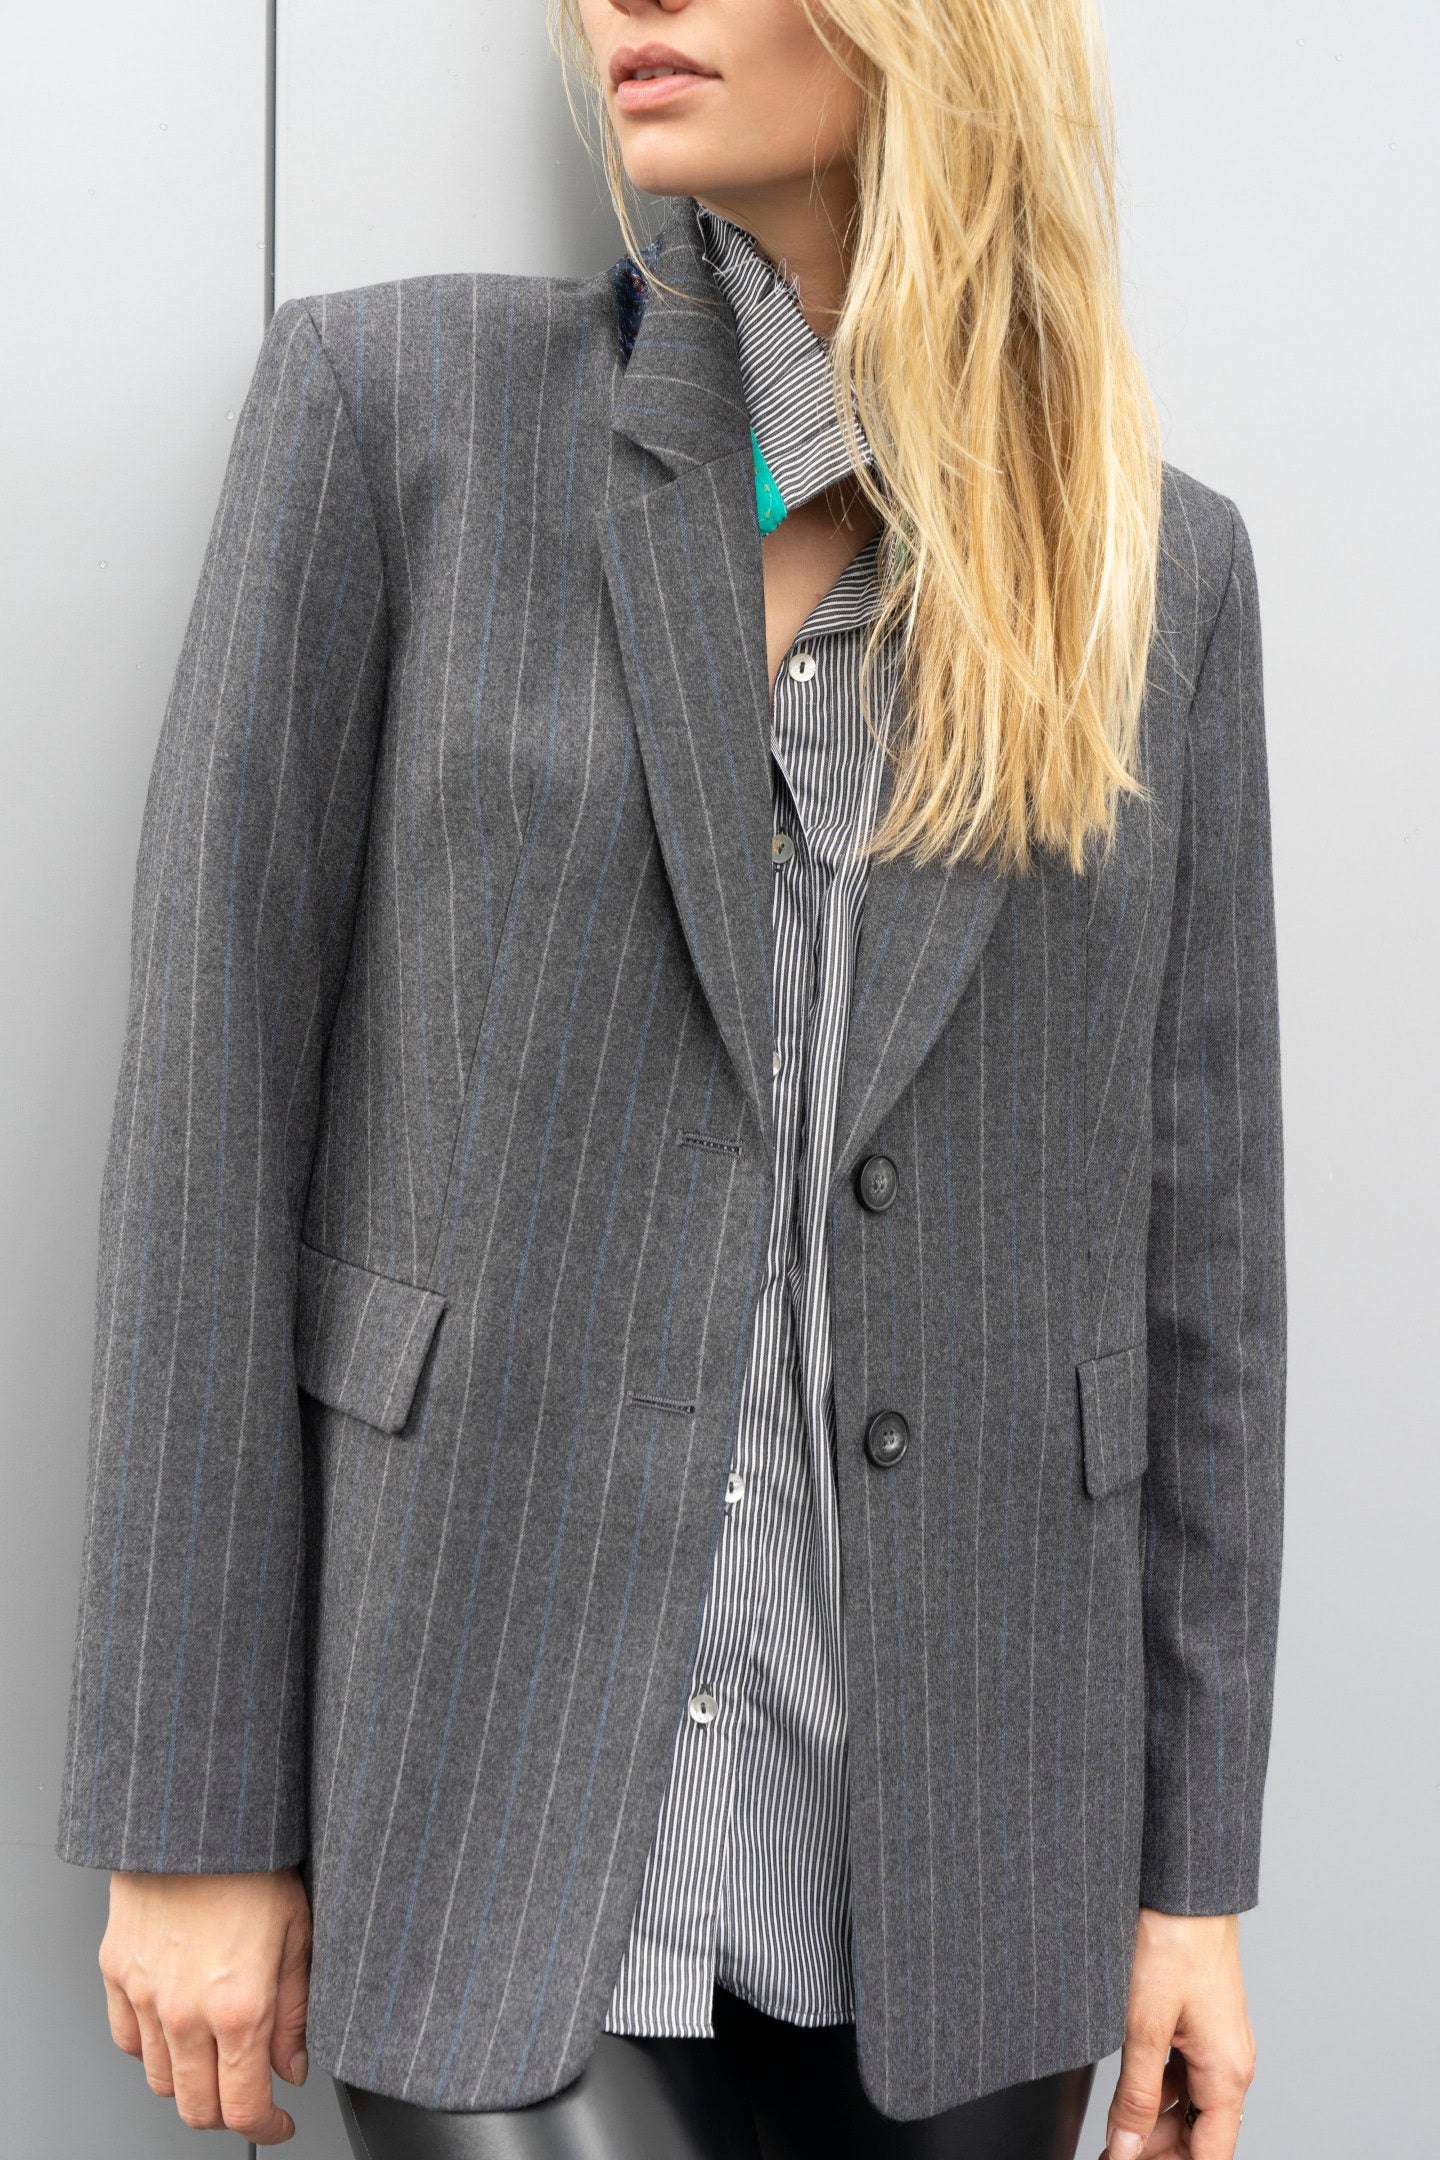 La Audrey - Oversized blazer jacket Wool with white chalk stripes Blue & gold paisley print lining